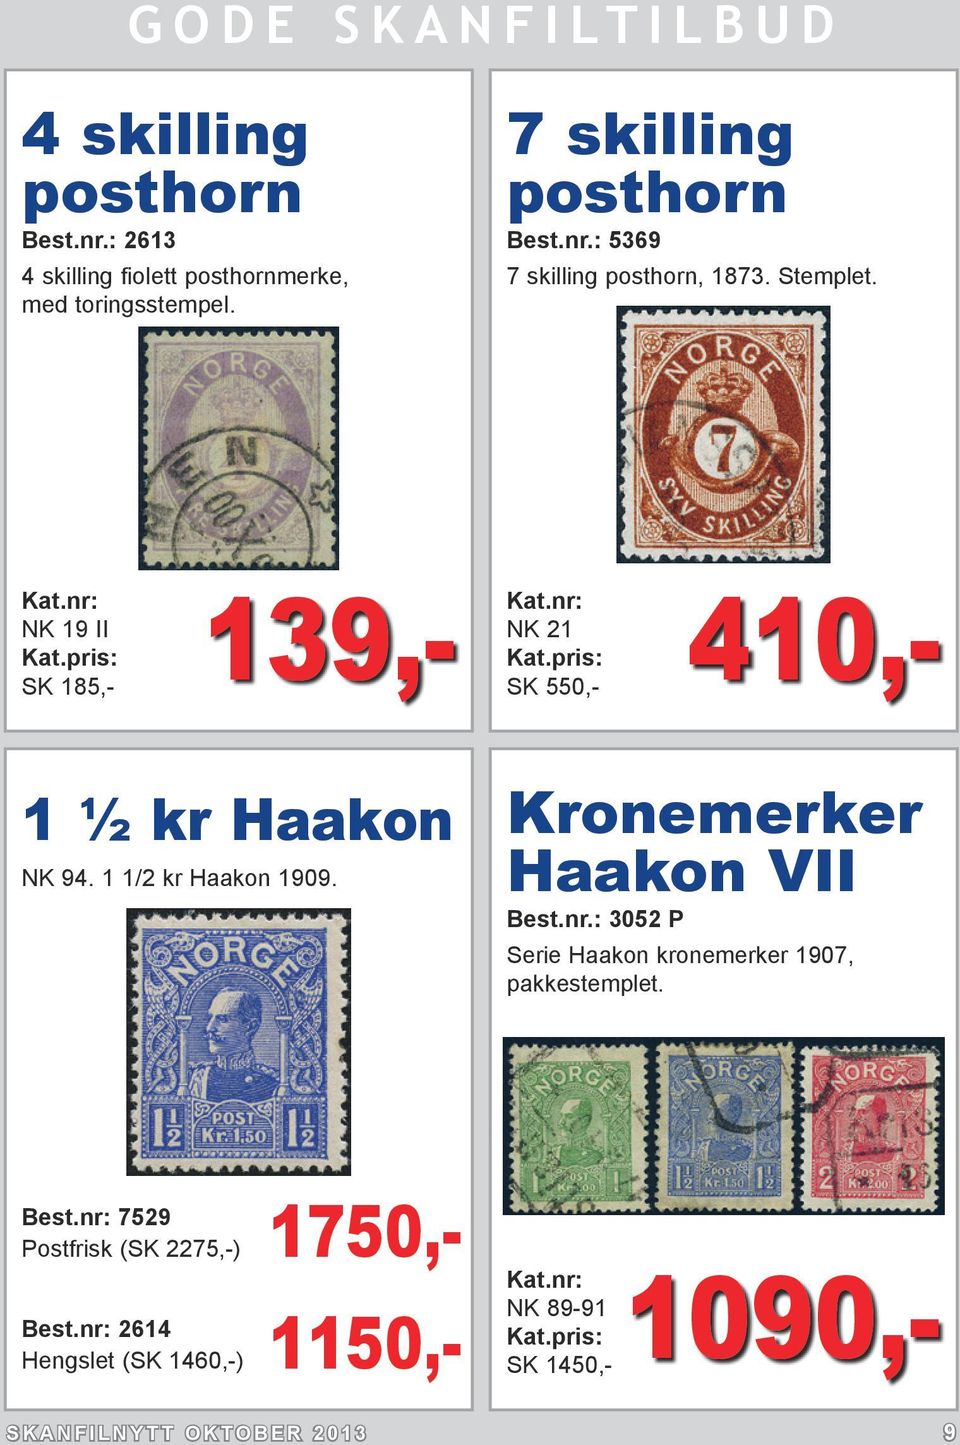 Kronemerker Haakon VII Best.nr.: 3052 P Serie Haakon kronemerker 1907, pakkestemplet. Best.nr: 7529 Postfrisk (SK 2275,-) 1750,- Best.